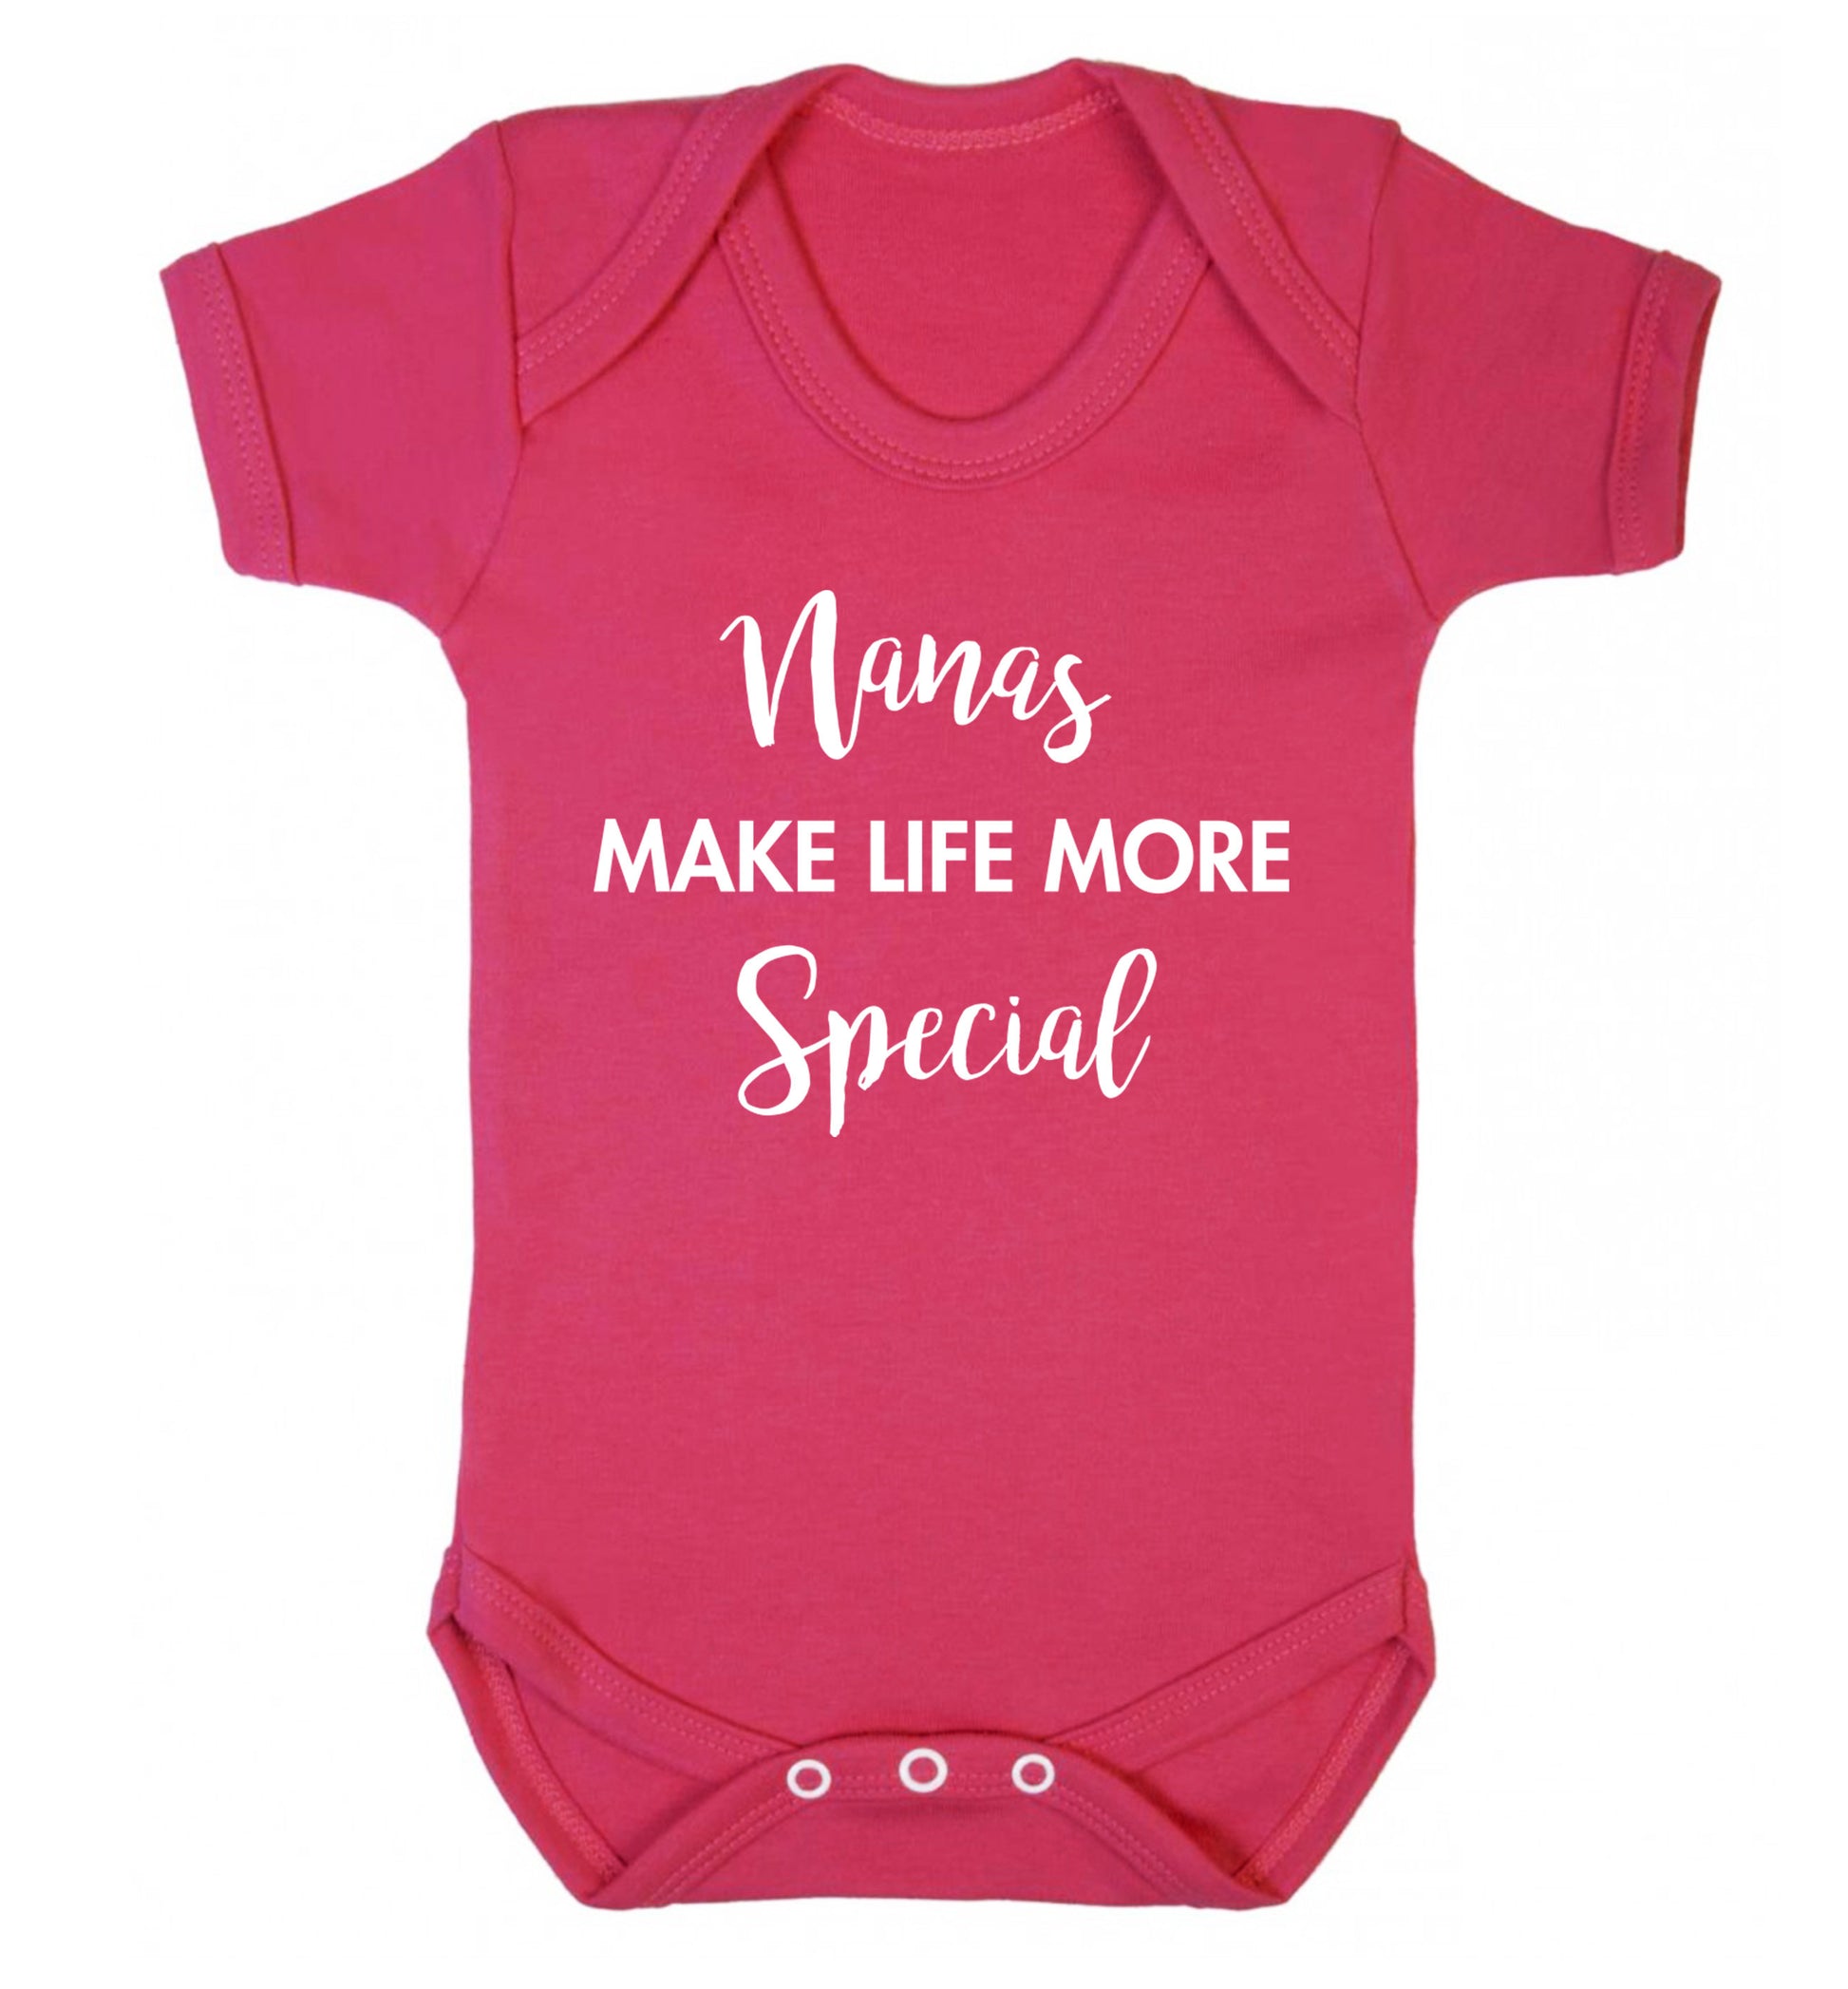 Nanas make life more special Baby Vest dark pink 18-24 months